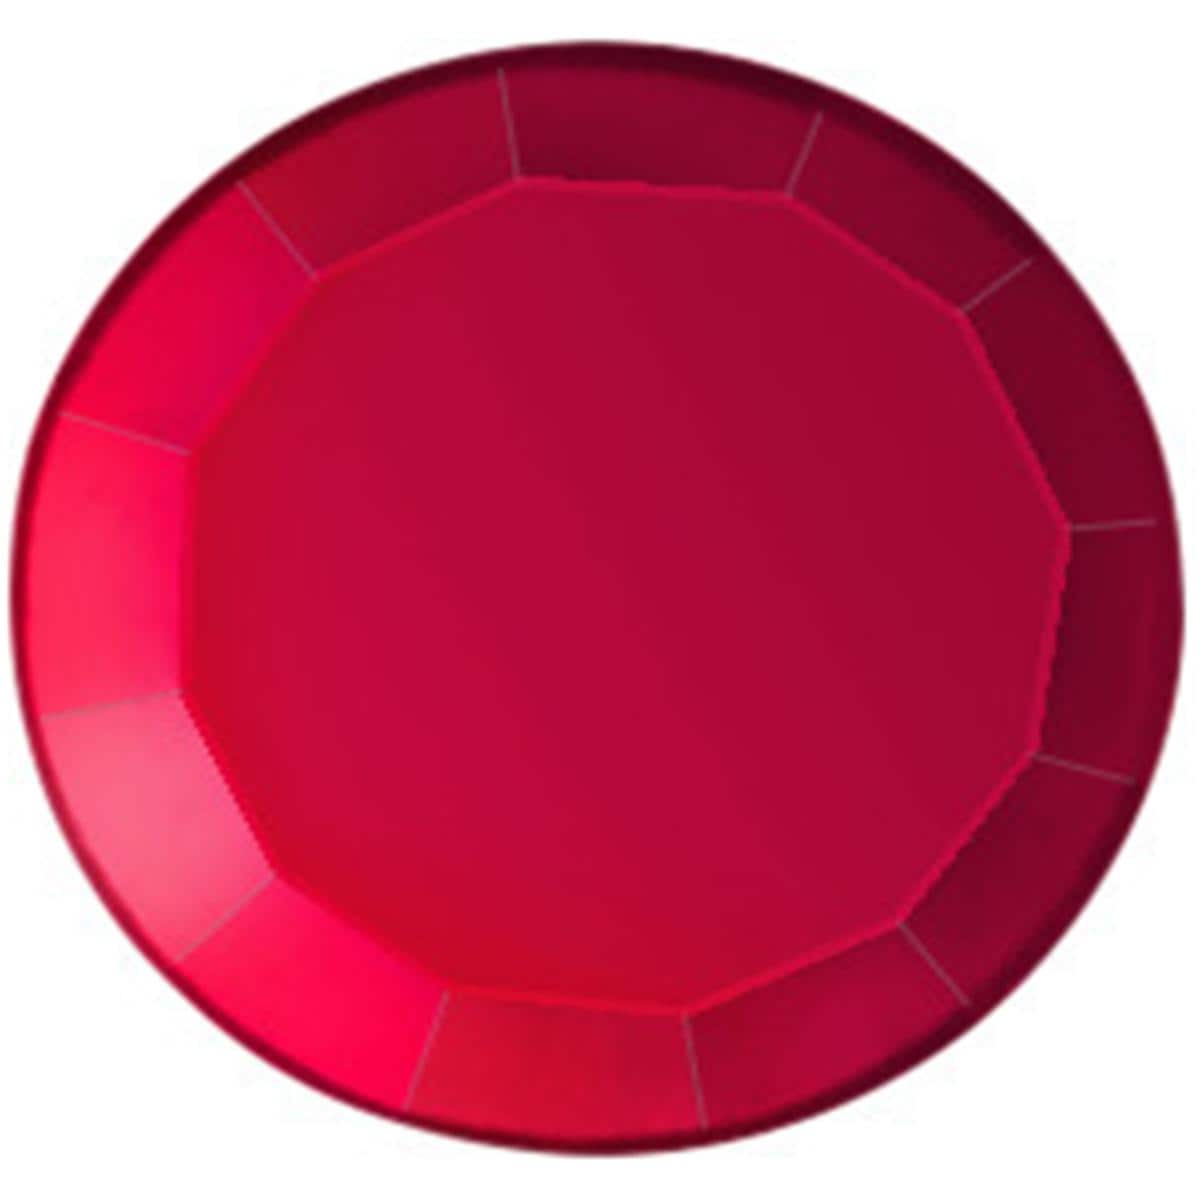 Prodental® Jewels, Ø 1,8 mm - Rot / Ruby, Packung 5 Stück